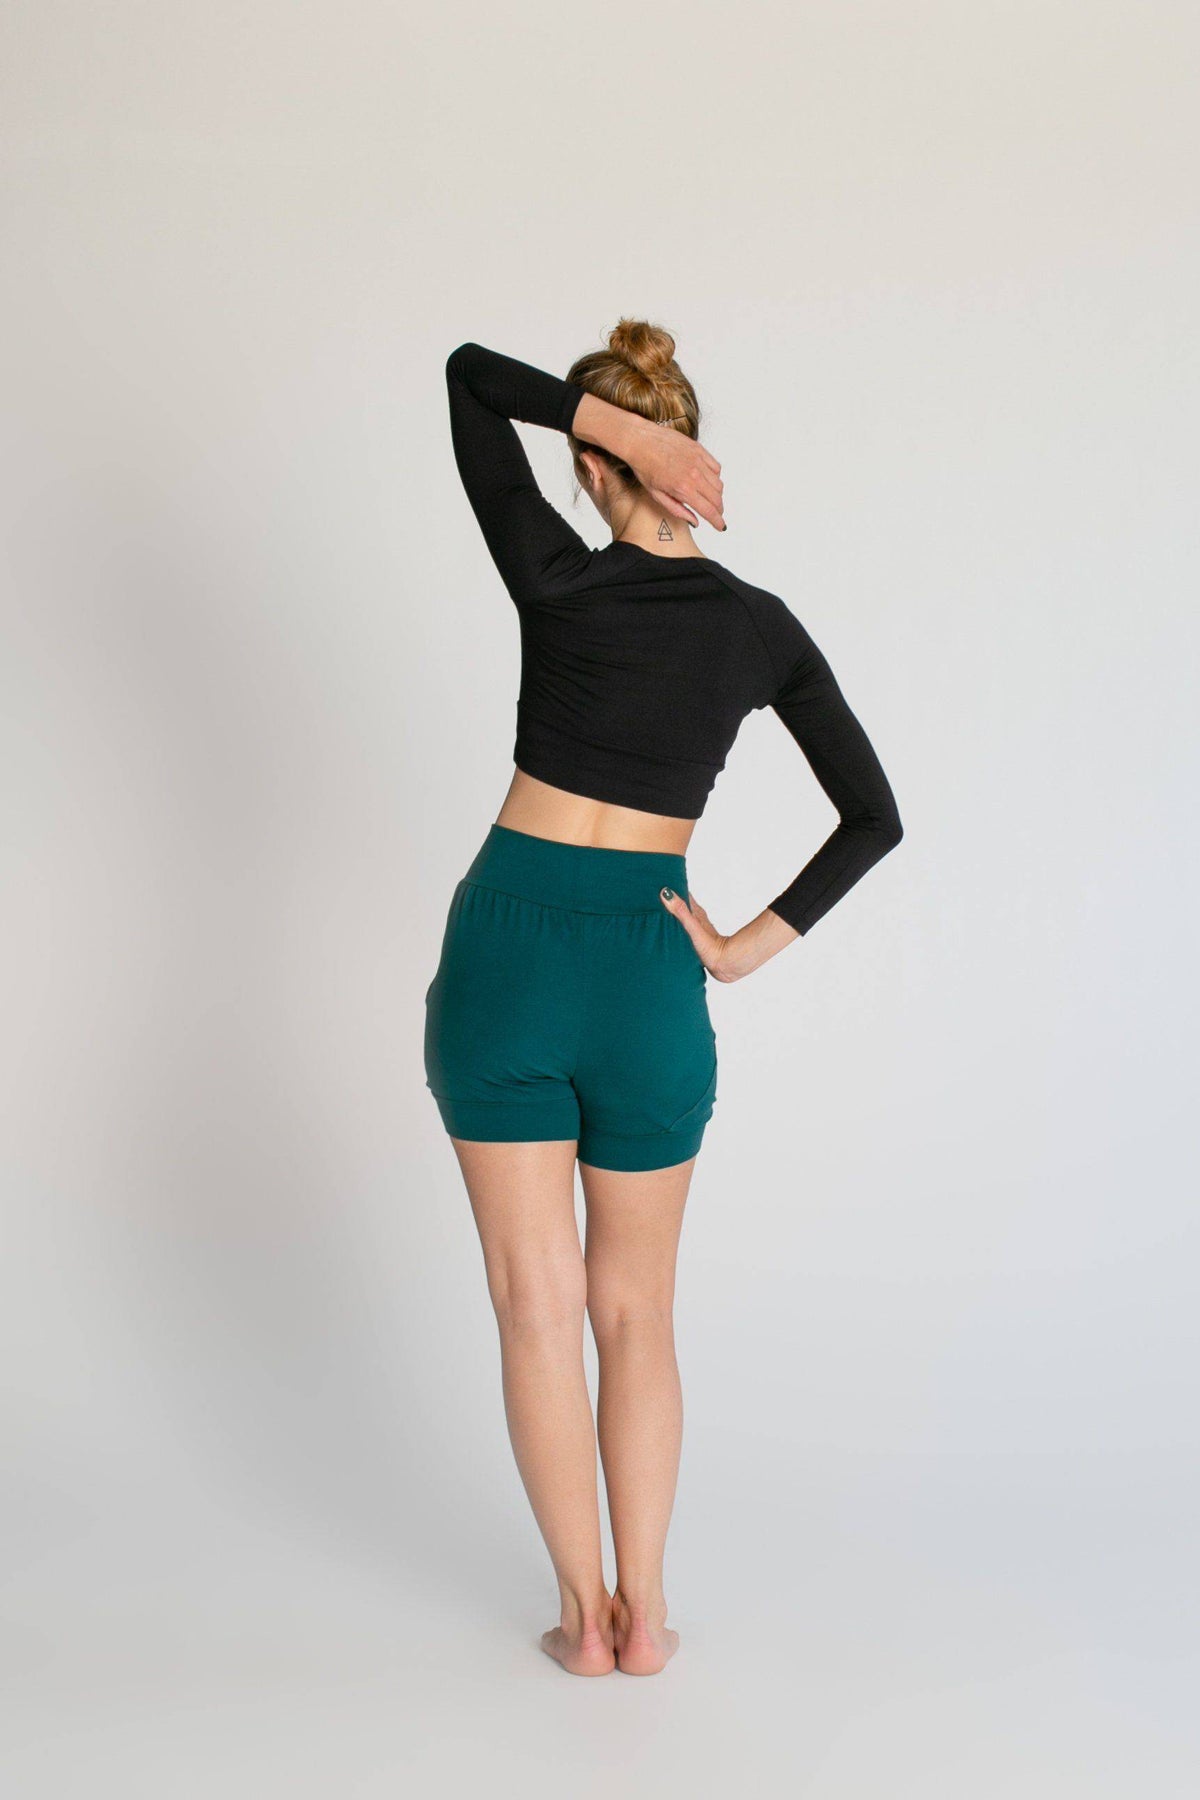 Ballerina Crop Top - womens clothing - Ripple Yoga Wear